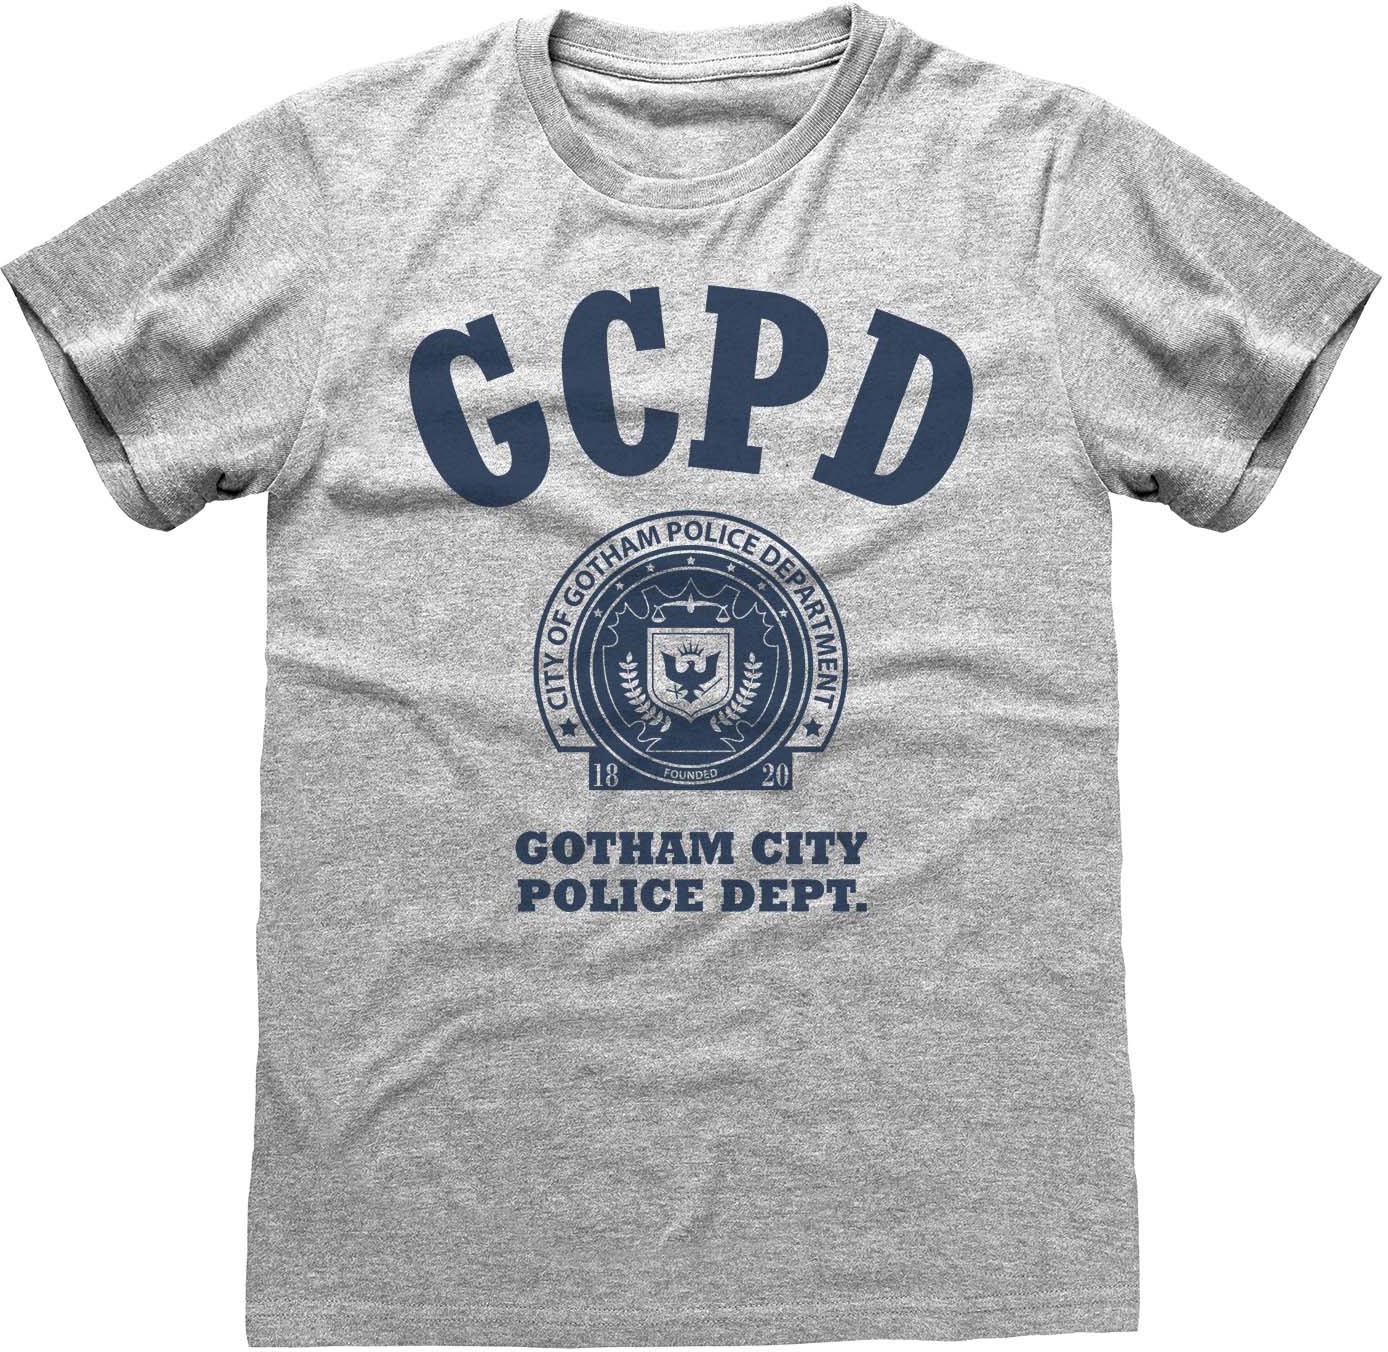 Batman - GCPD T-Shirt Grey